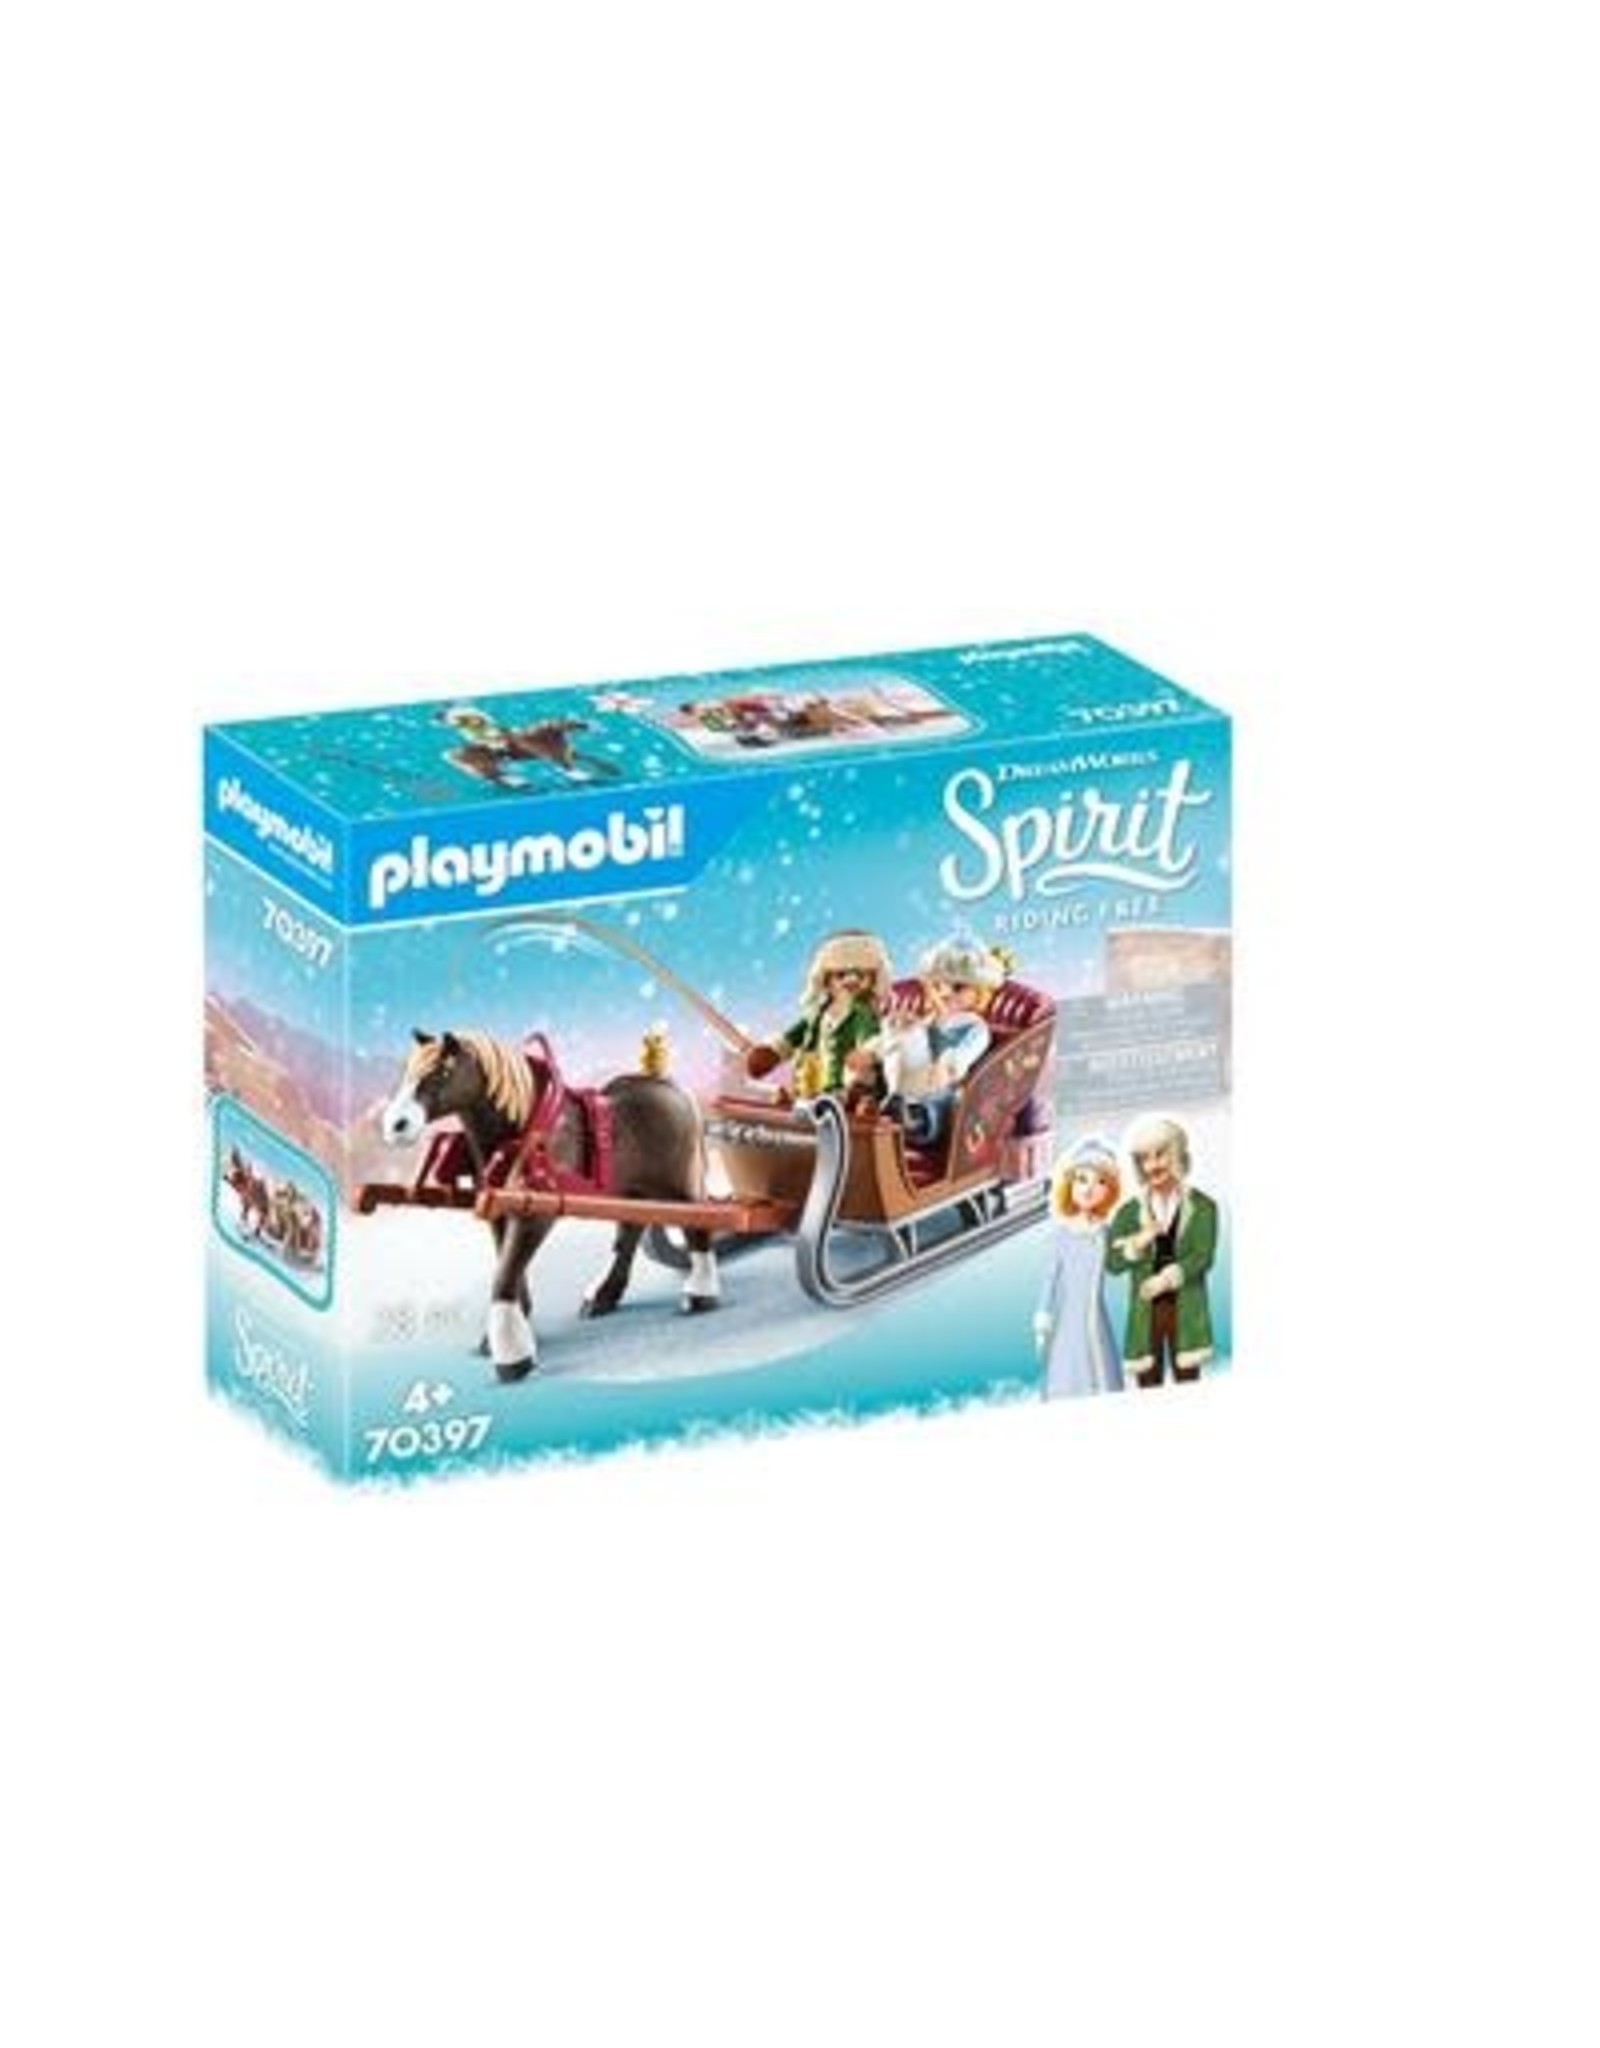 Playmobil Playmobil Spirit 70397  Winter Sleerit